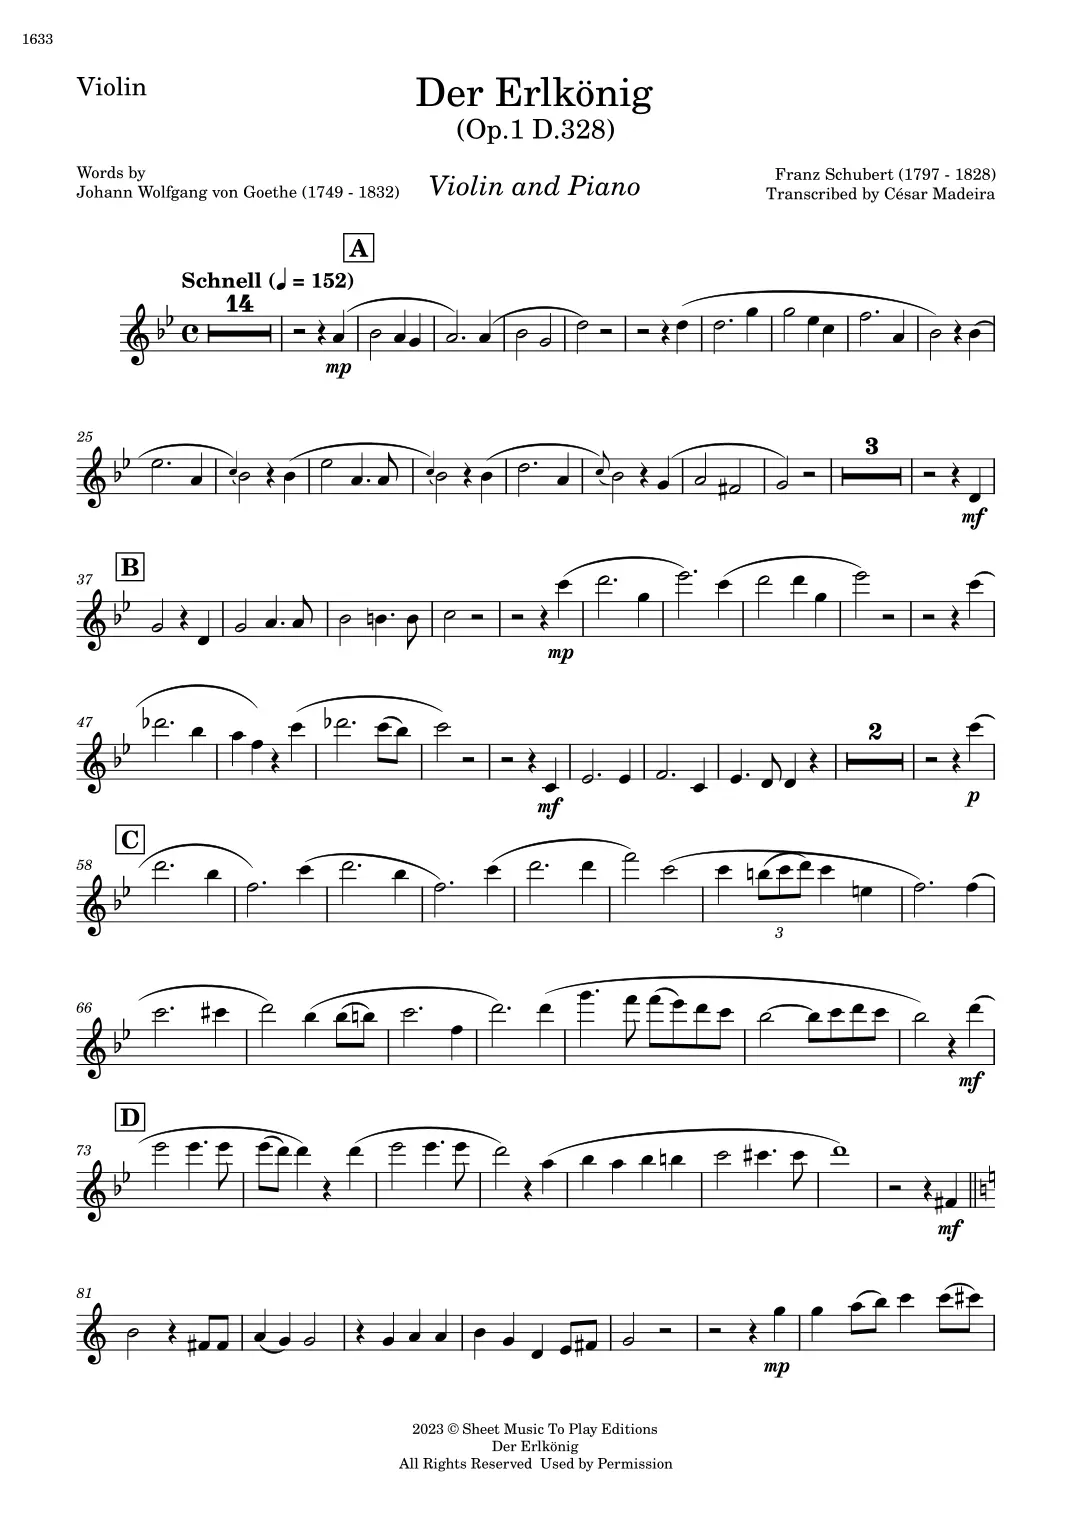 der erlkönig violin - What does the piano represent in Elfking